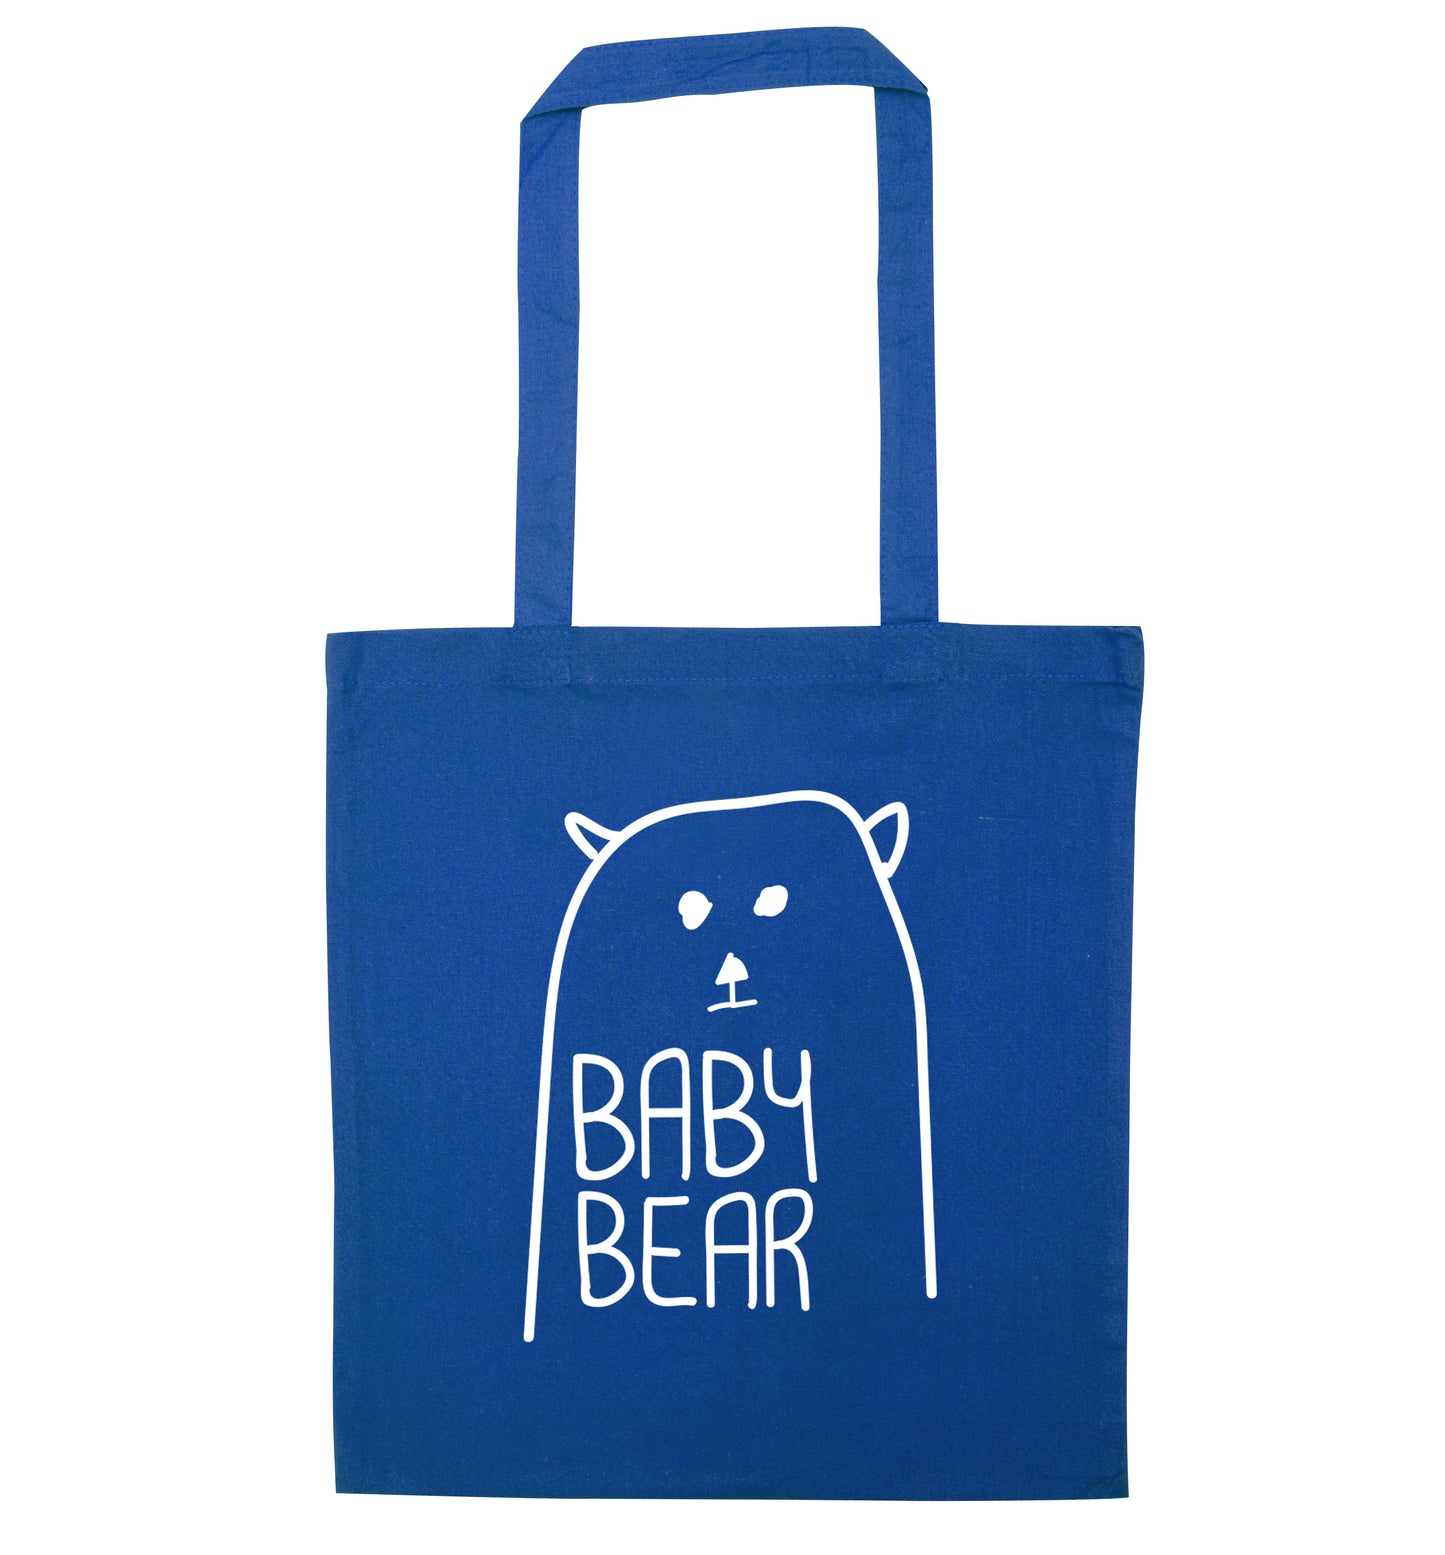 Baby bear blue tote bag